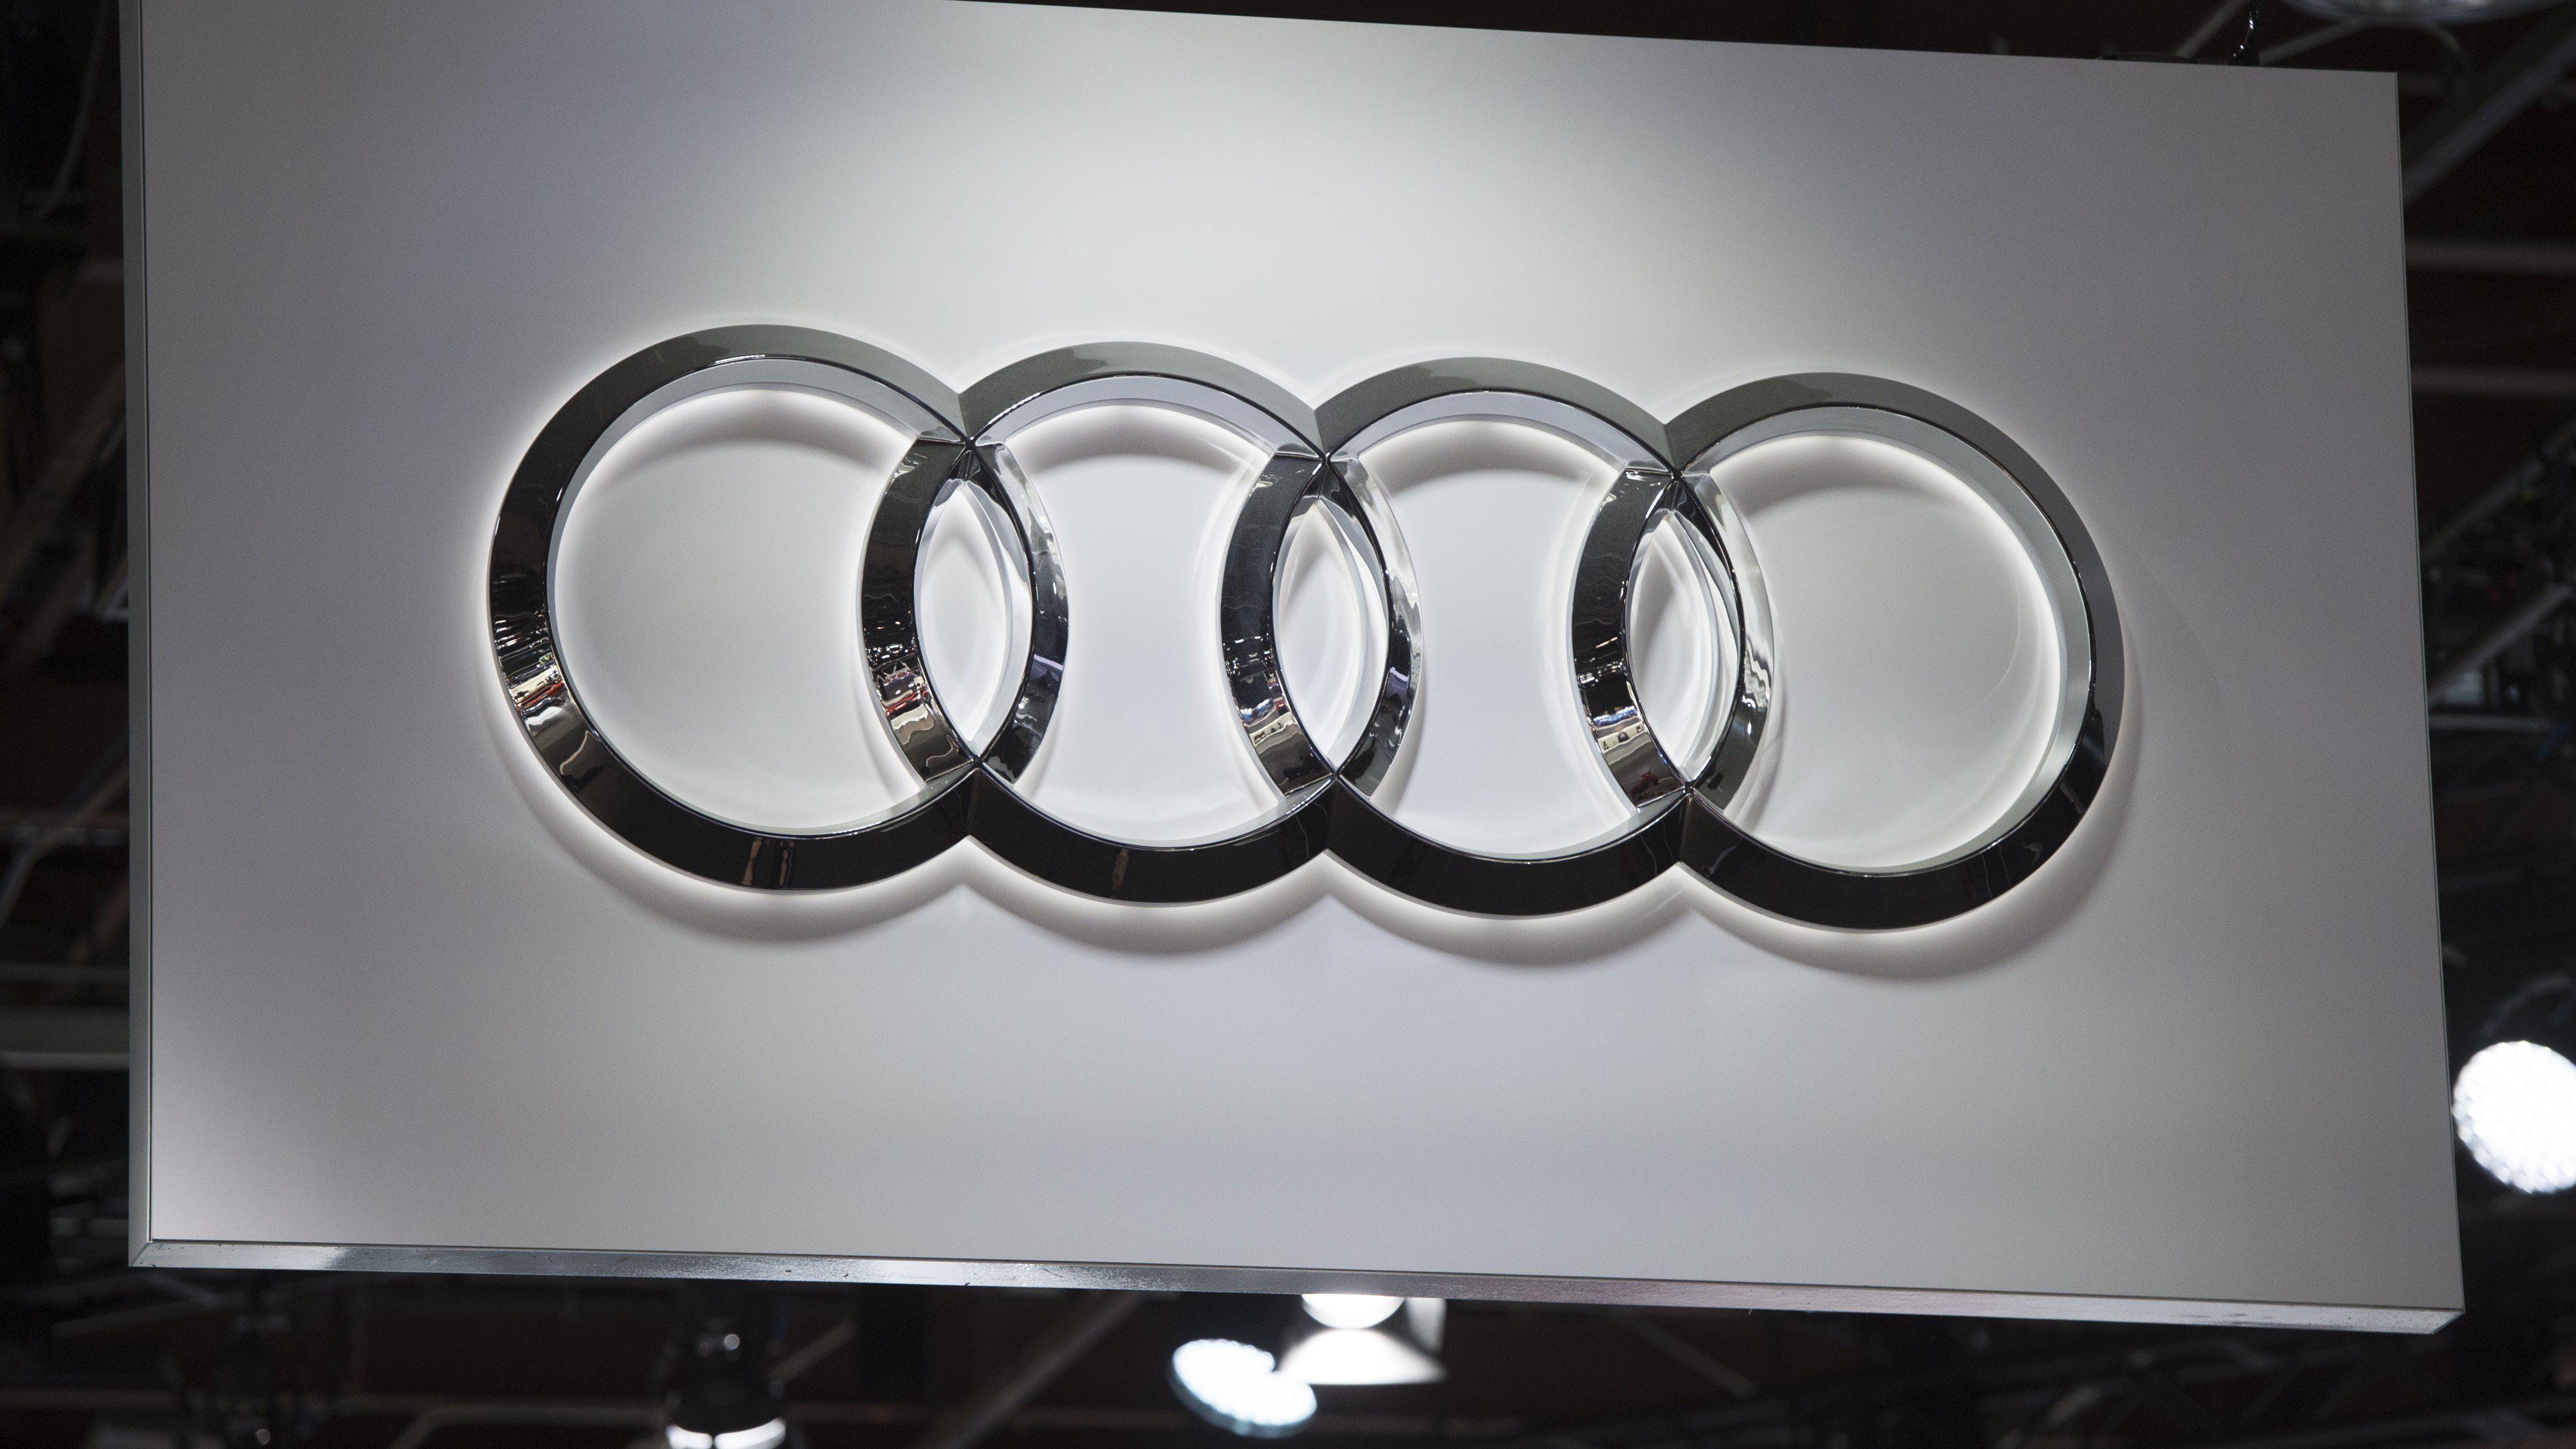 The Audi logo.